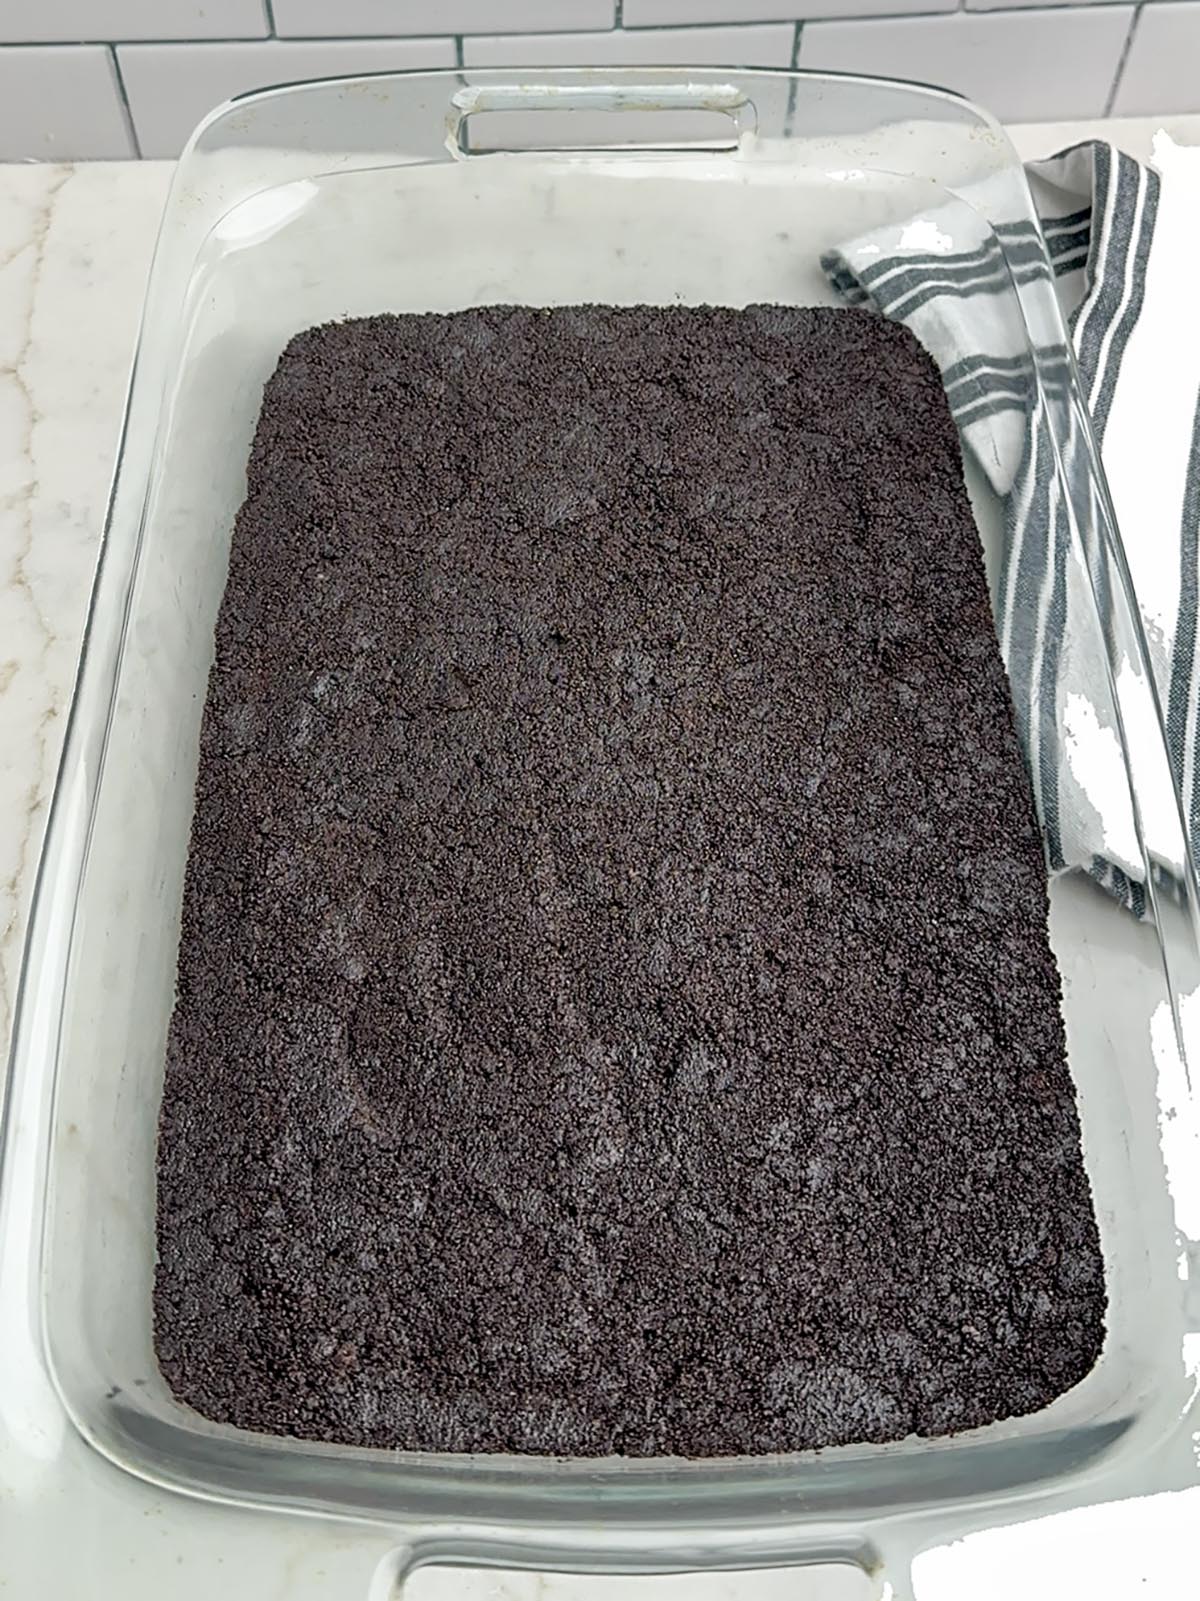 Oreo crust in a clear baking pan